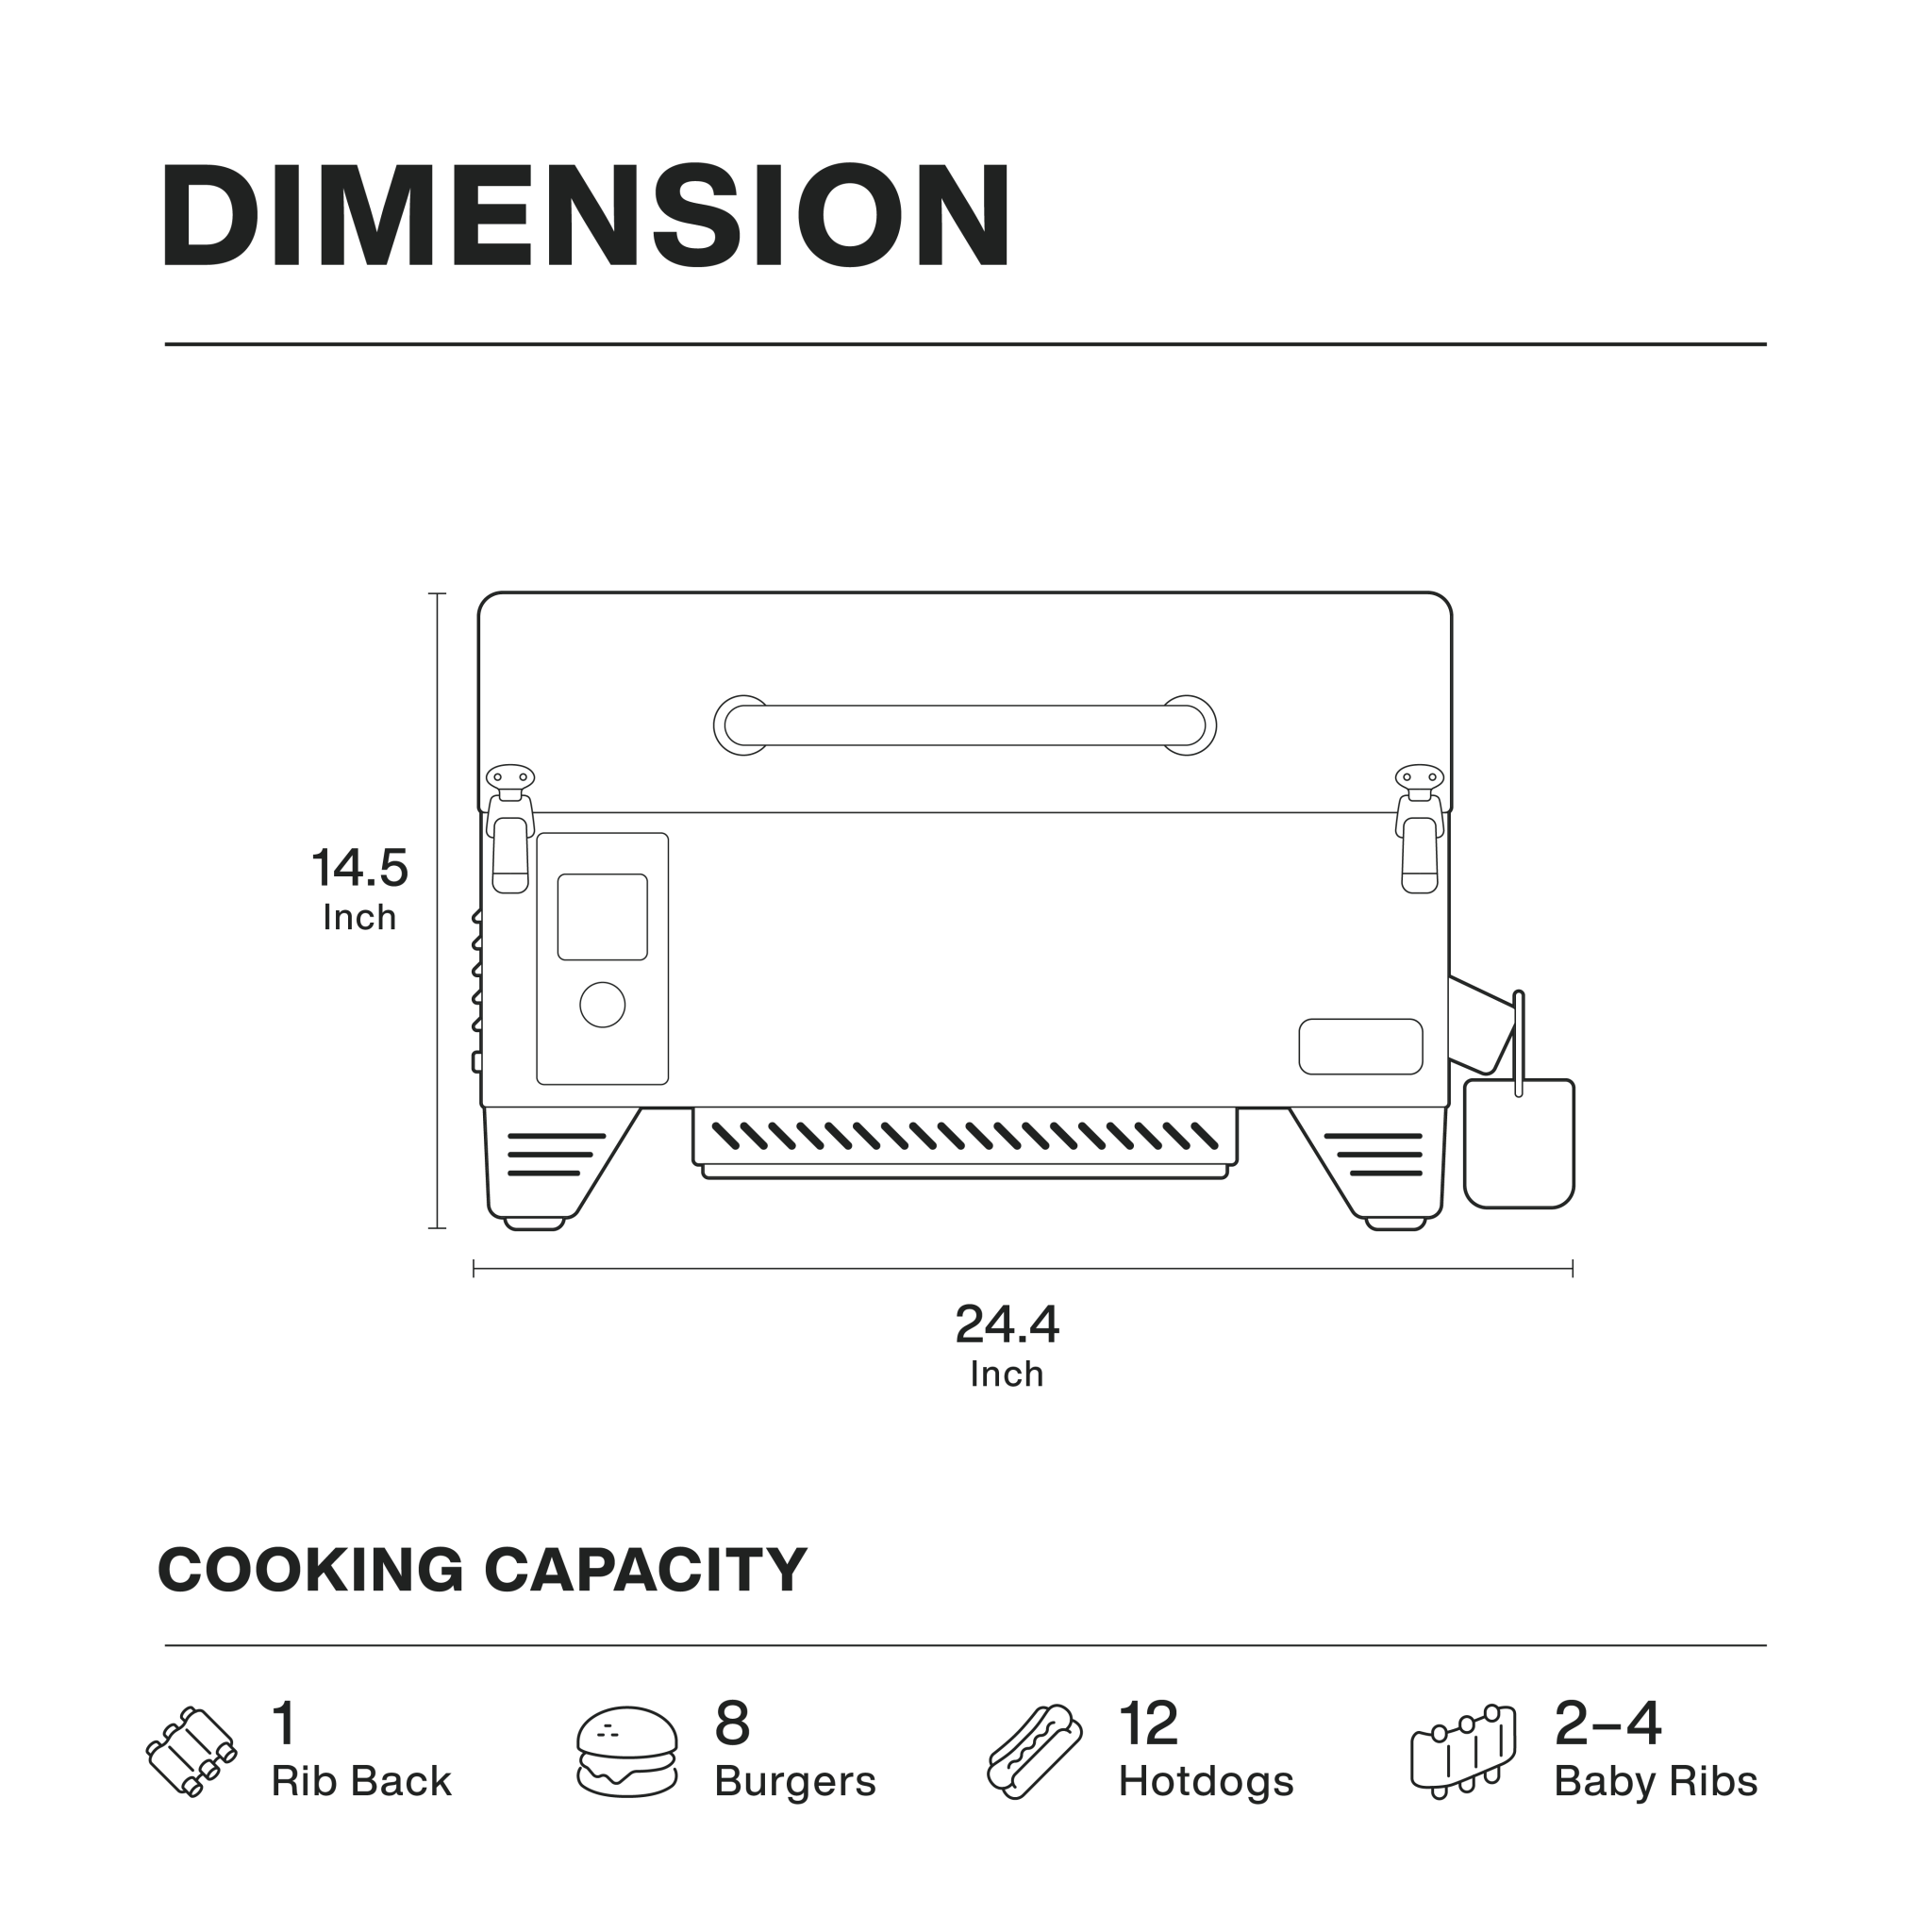 Asmoke AS300 Portable Wood Pellet Grill Dimensions